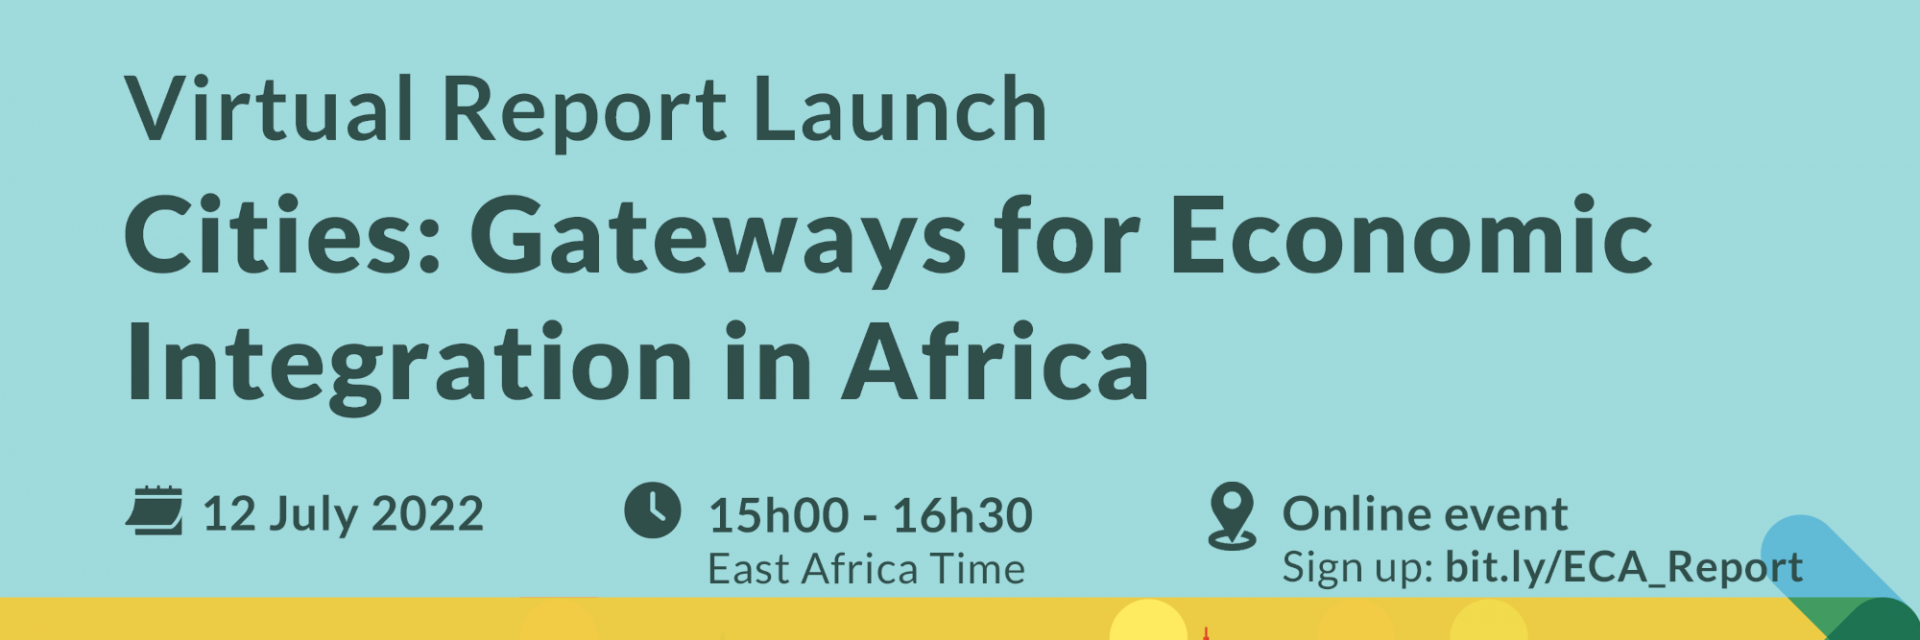 Virtual Report Launch - Cities: Gateways for Africa’s Regional Economic Integration